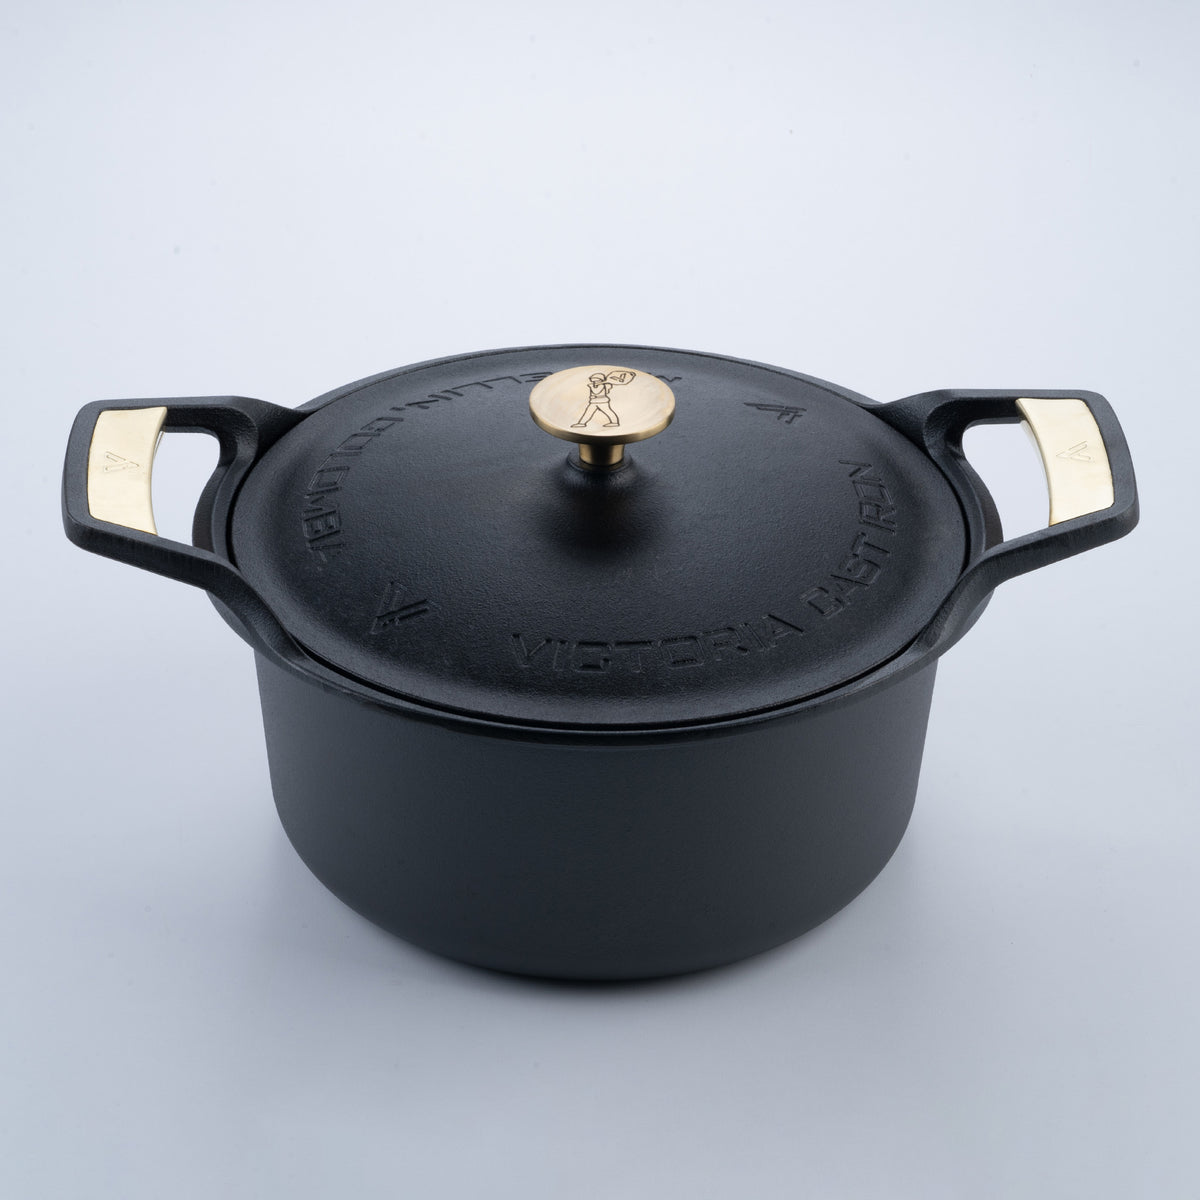 Instant pot Dutch oven 6 quart - general for sale - by owner - craigslist